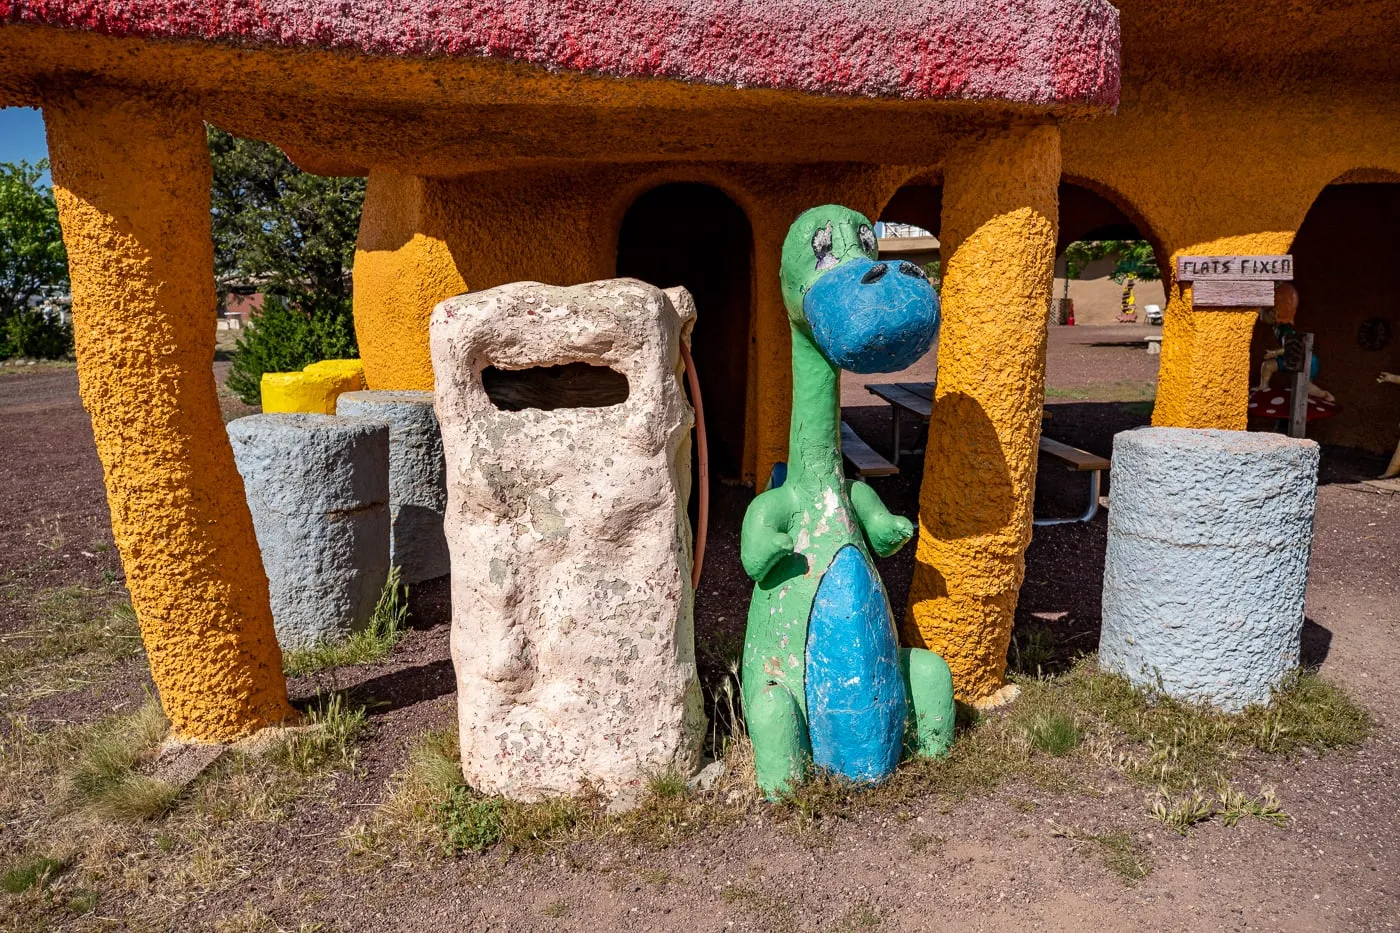 Dino Gas Station at Flintstones Bedrock City in Williams, Arizona